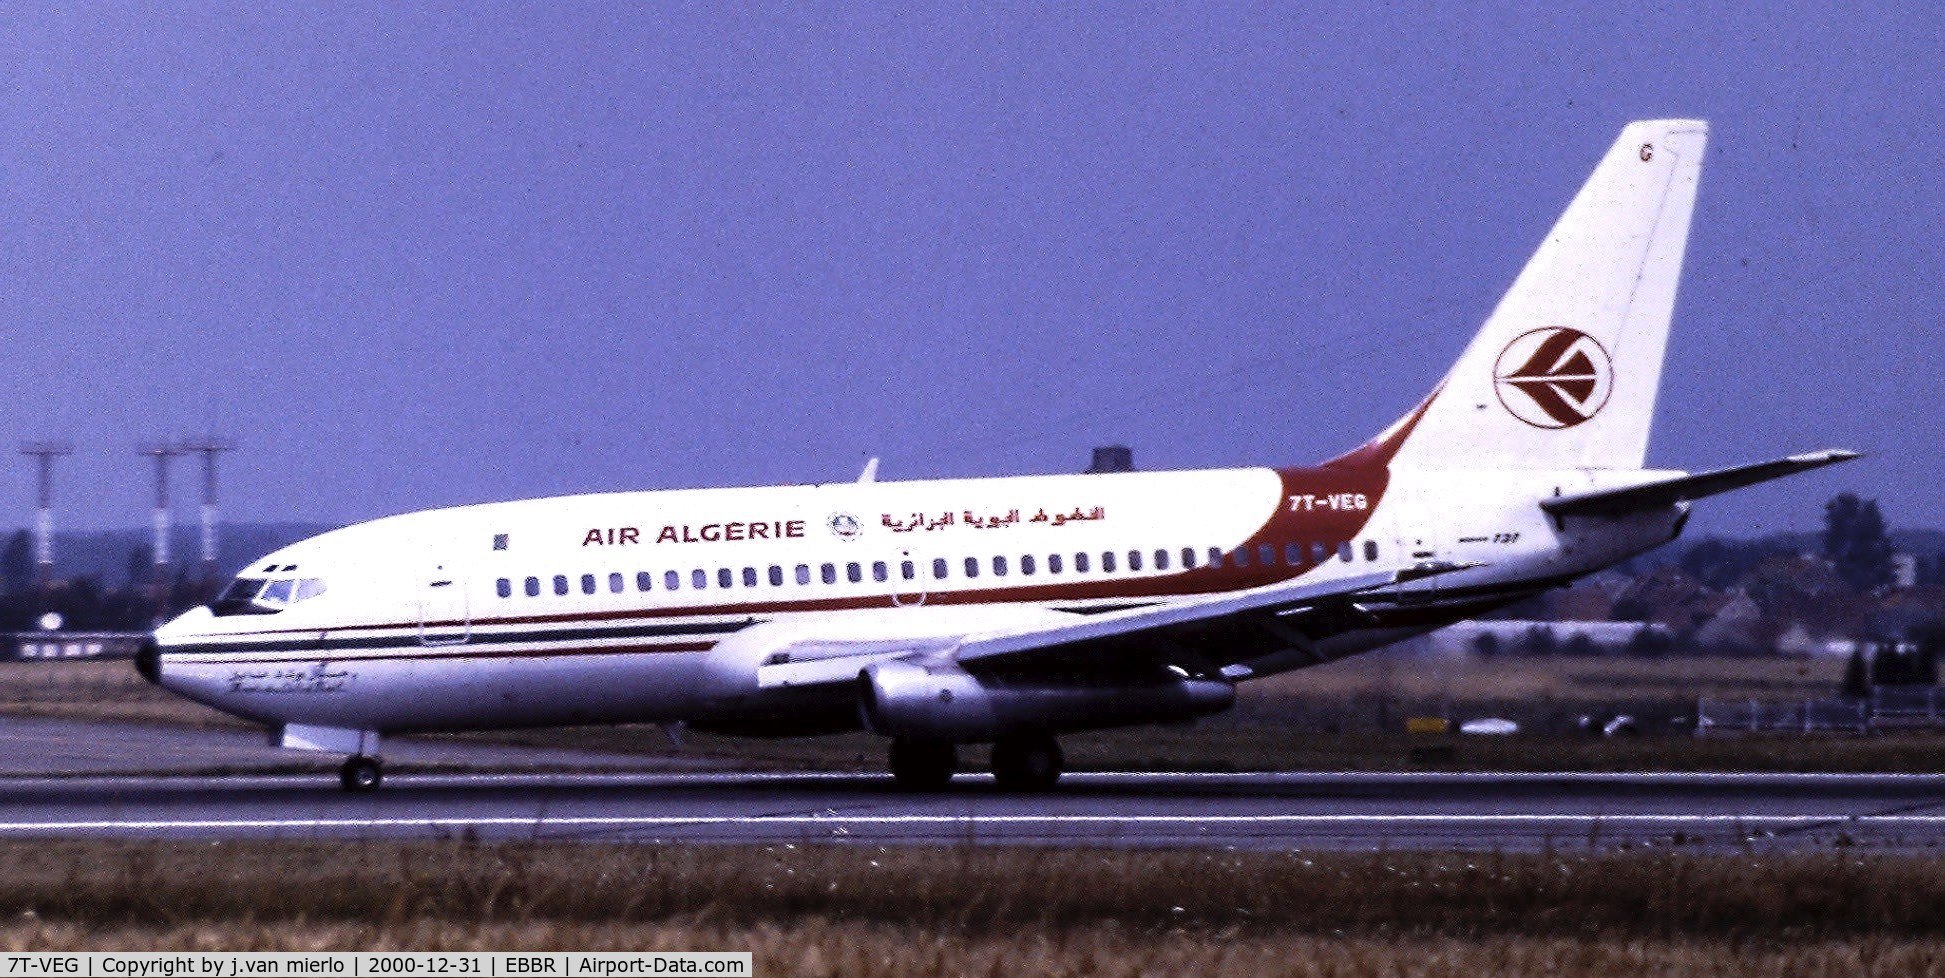 7T-VEG, 1974 Boeing 737-2D6 C/N 20884, Landing at Brussels, Belgium 25L